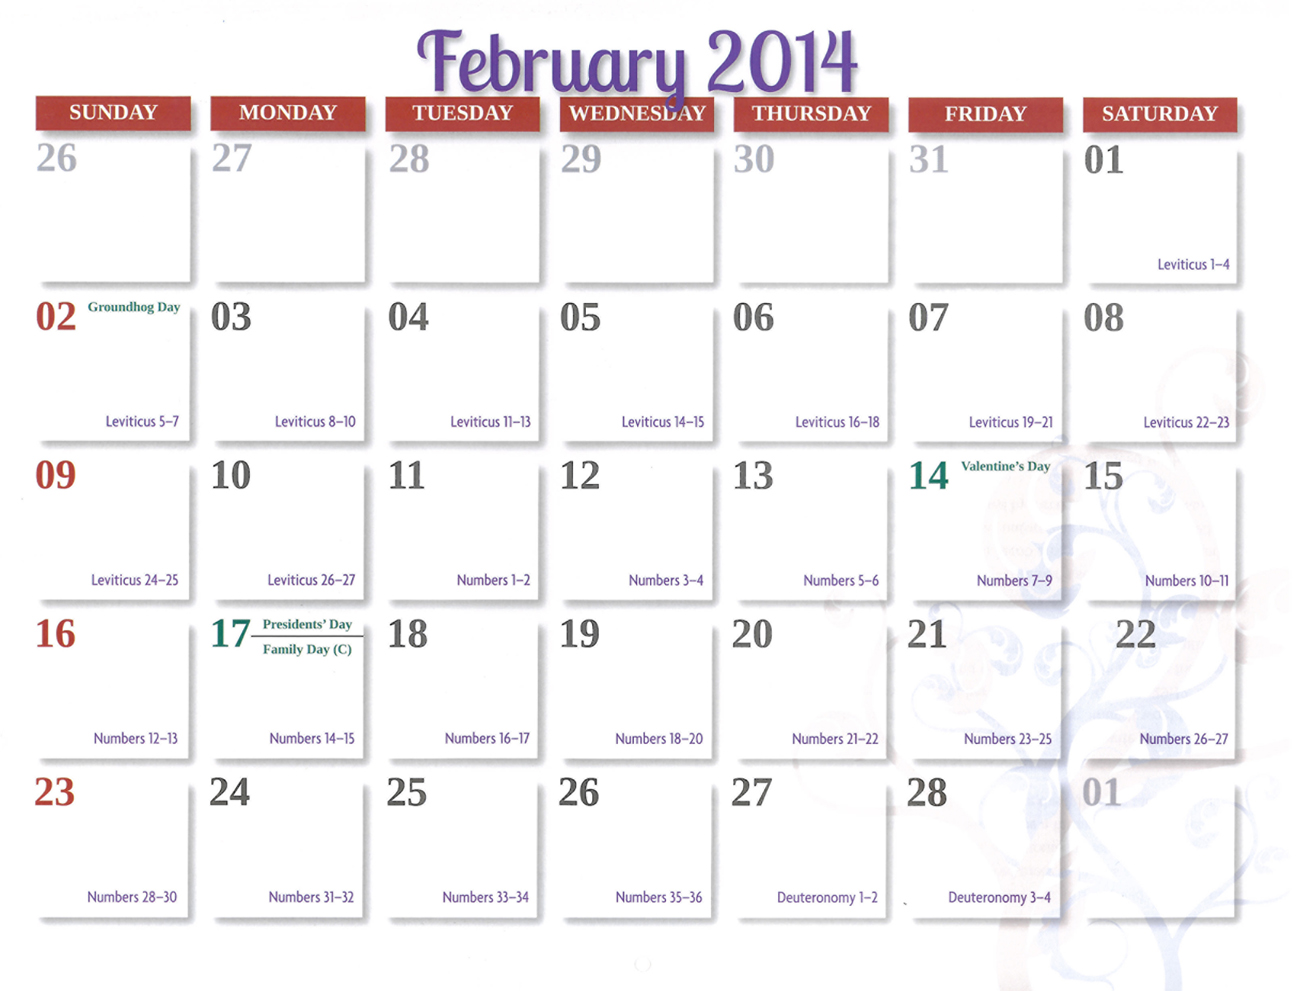 2014 Prophecy Calendar: February - Prophecies of Isaiah